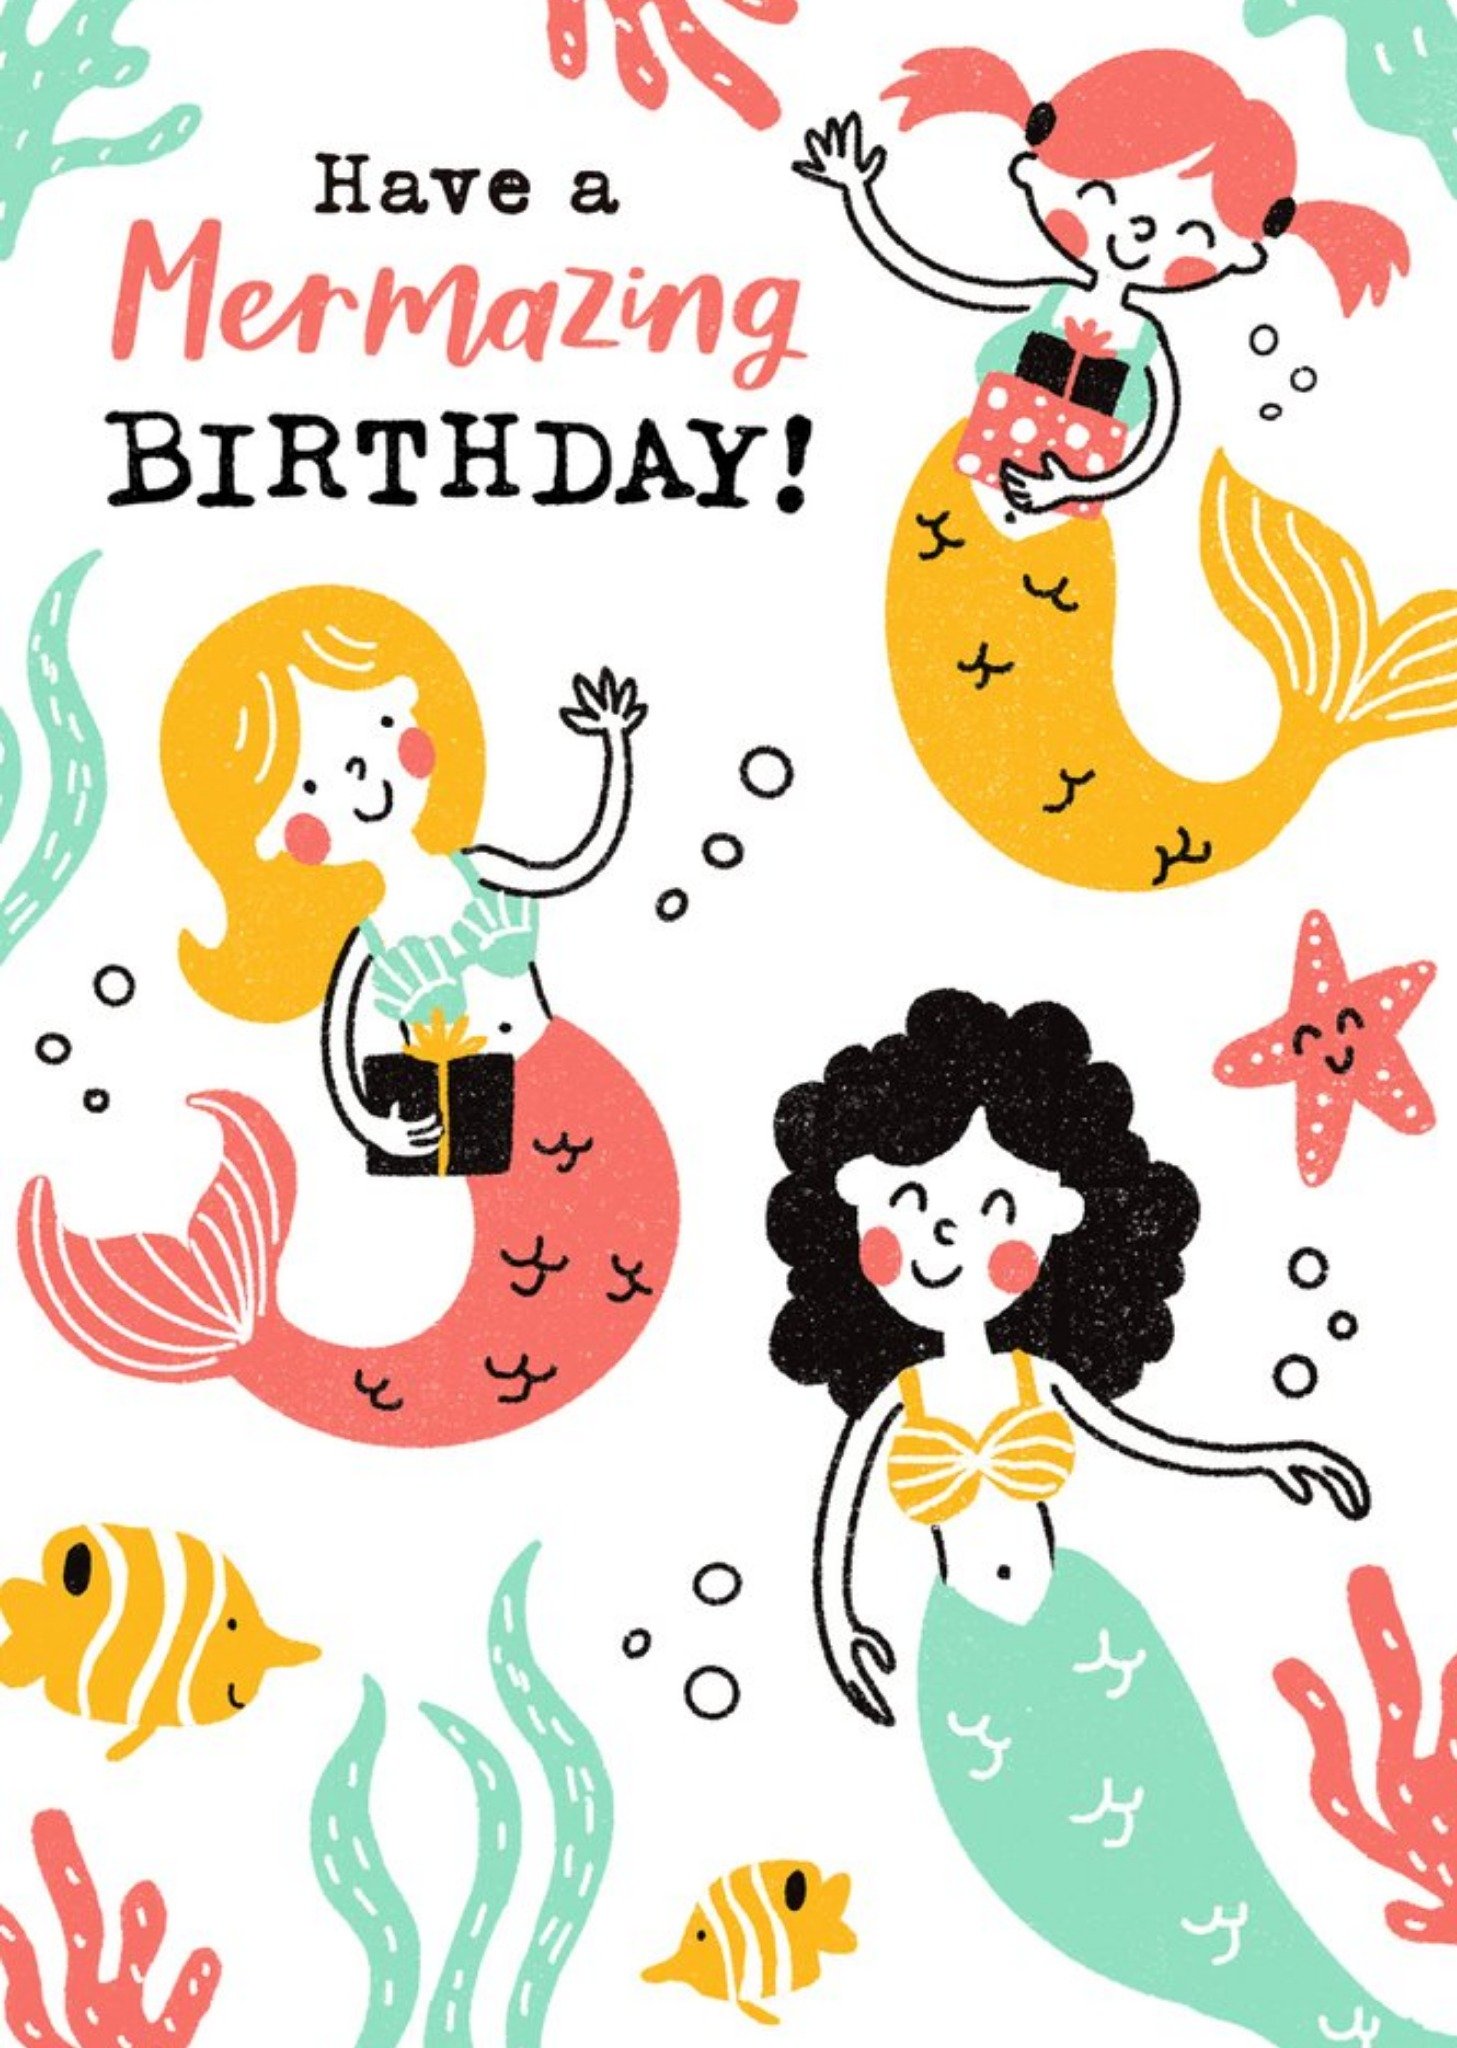 Moonpig Bright Illustration Of Mermaids And Fish Have A Mermazing Birthday Card Ecard